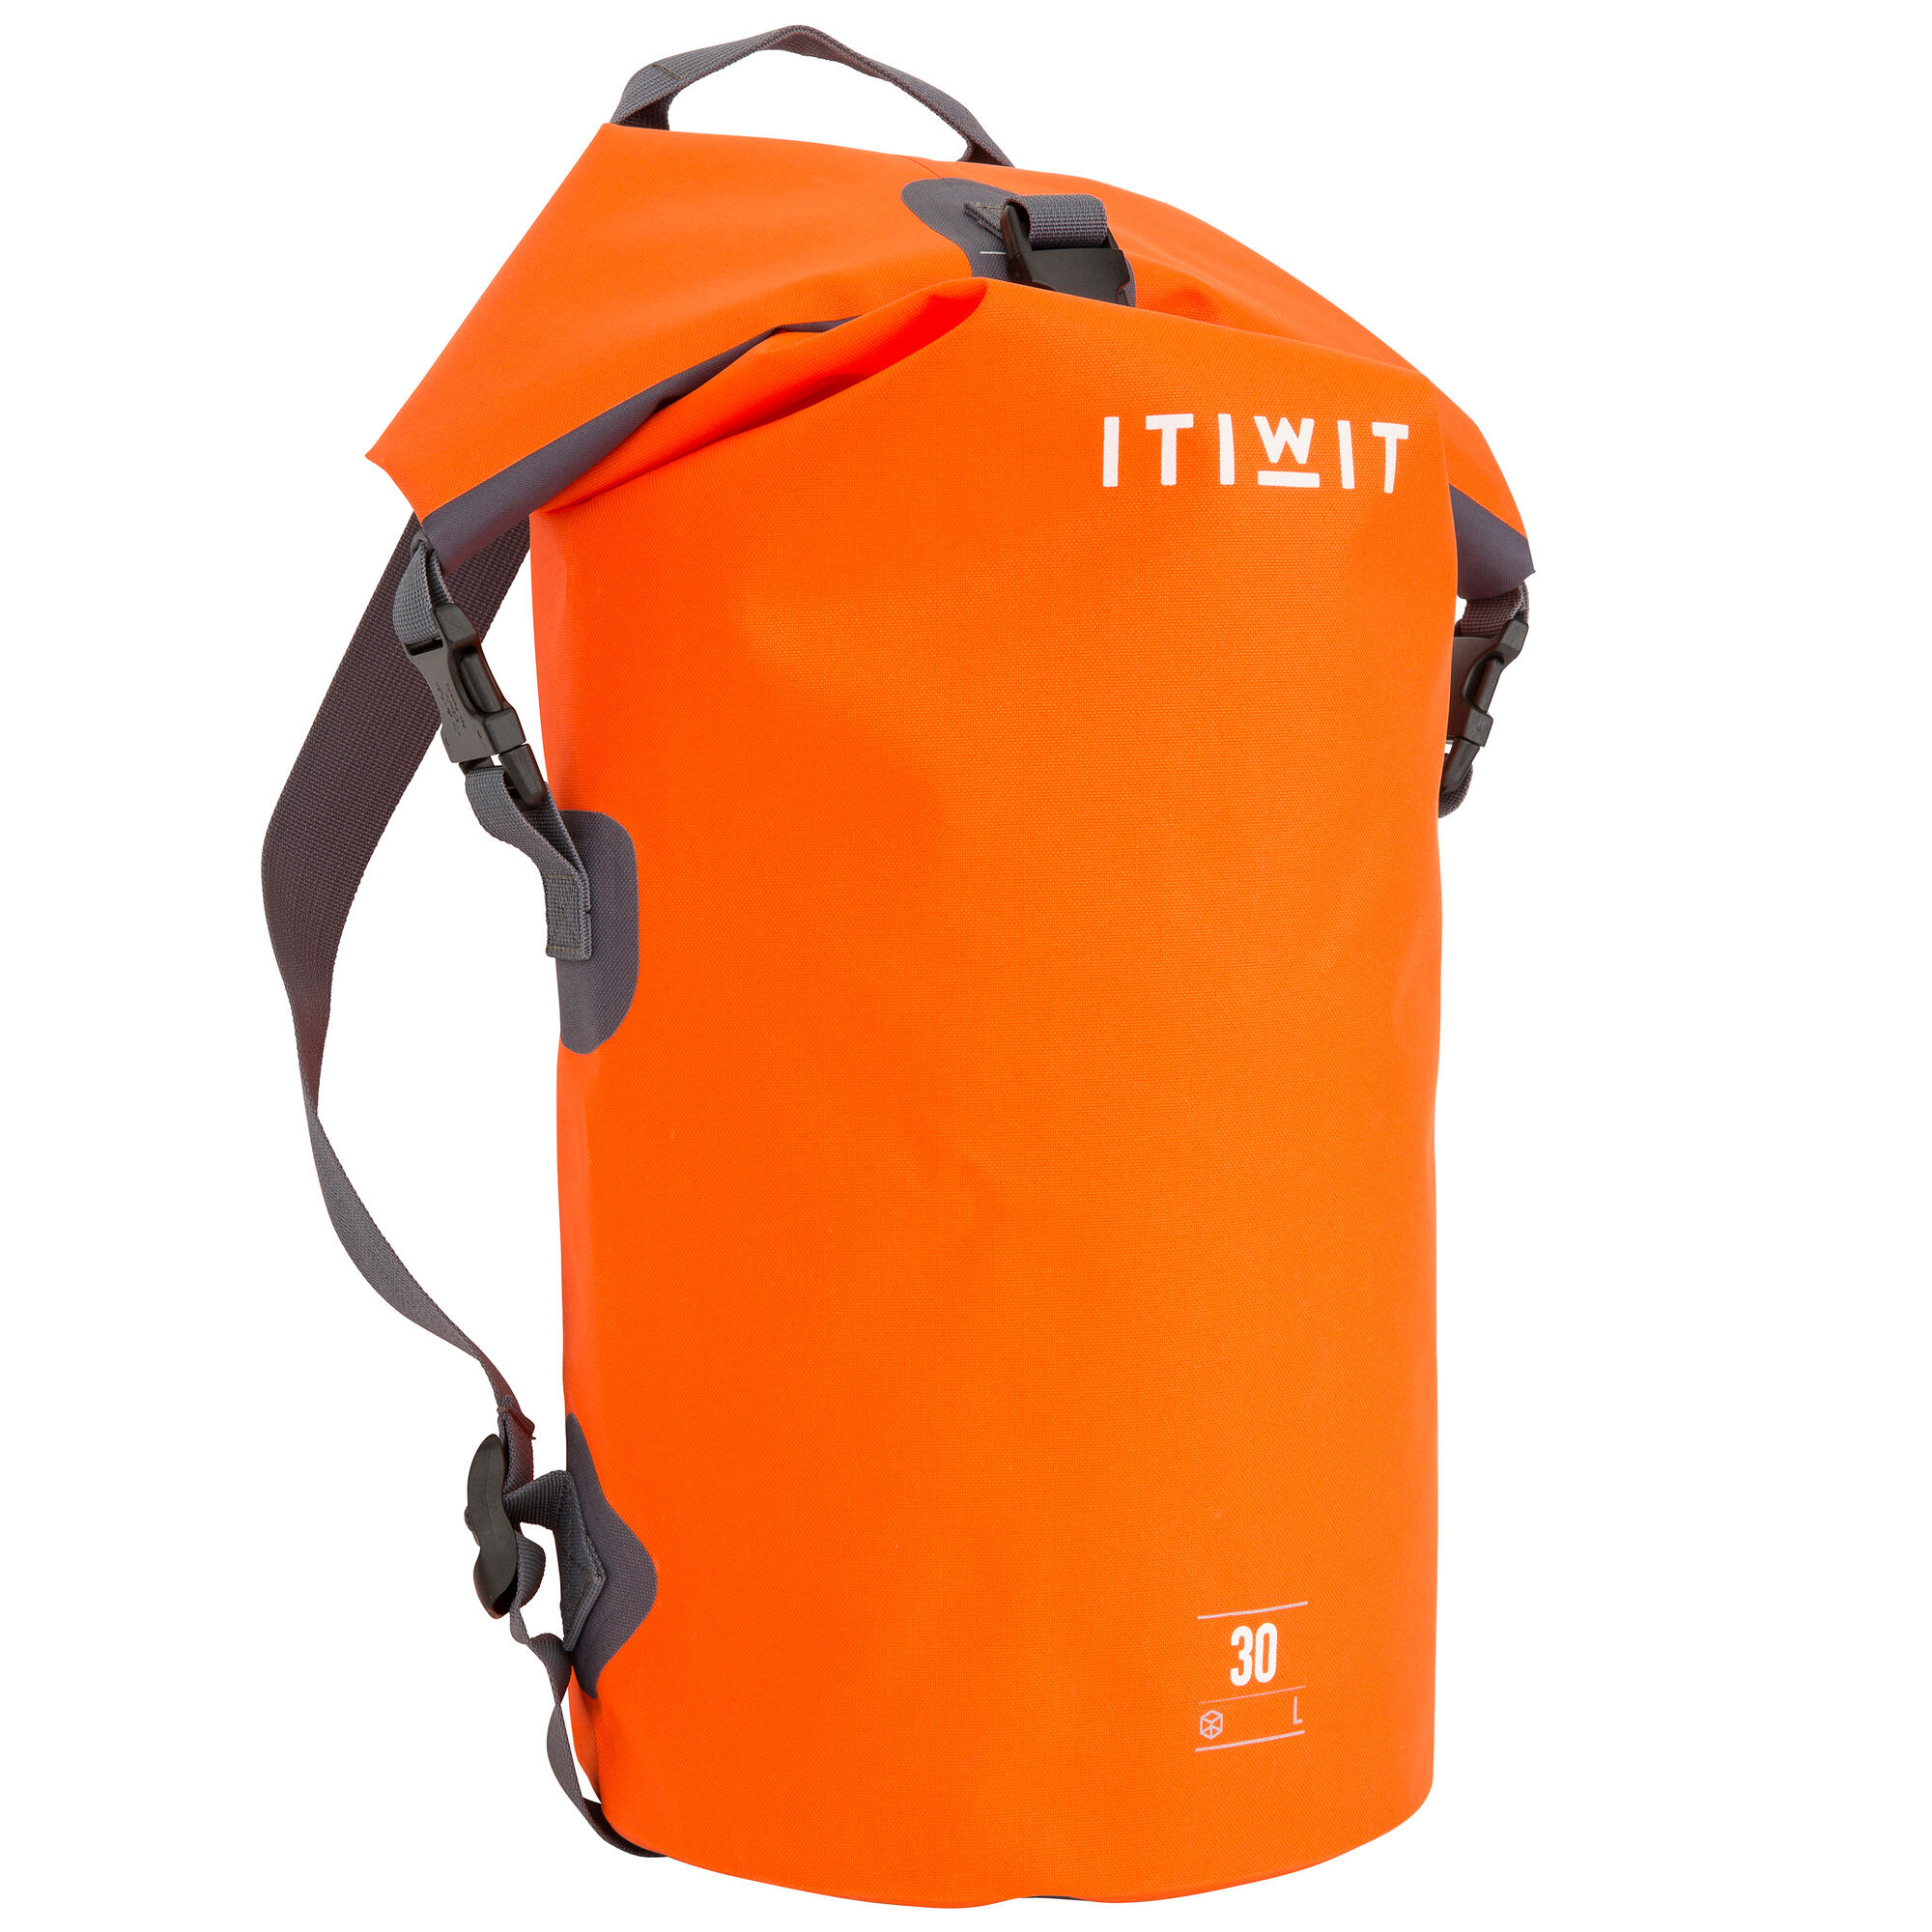 Waterproof Dry Bag 30L - Orange | itiwit